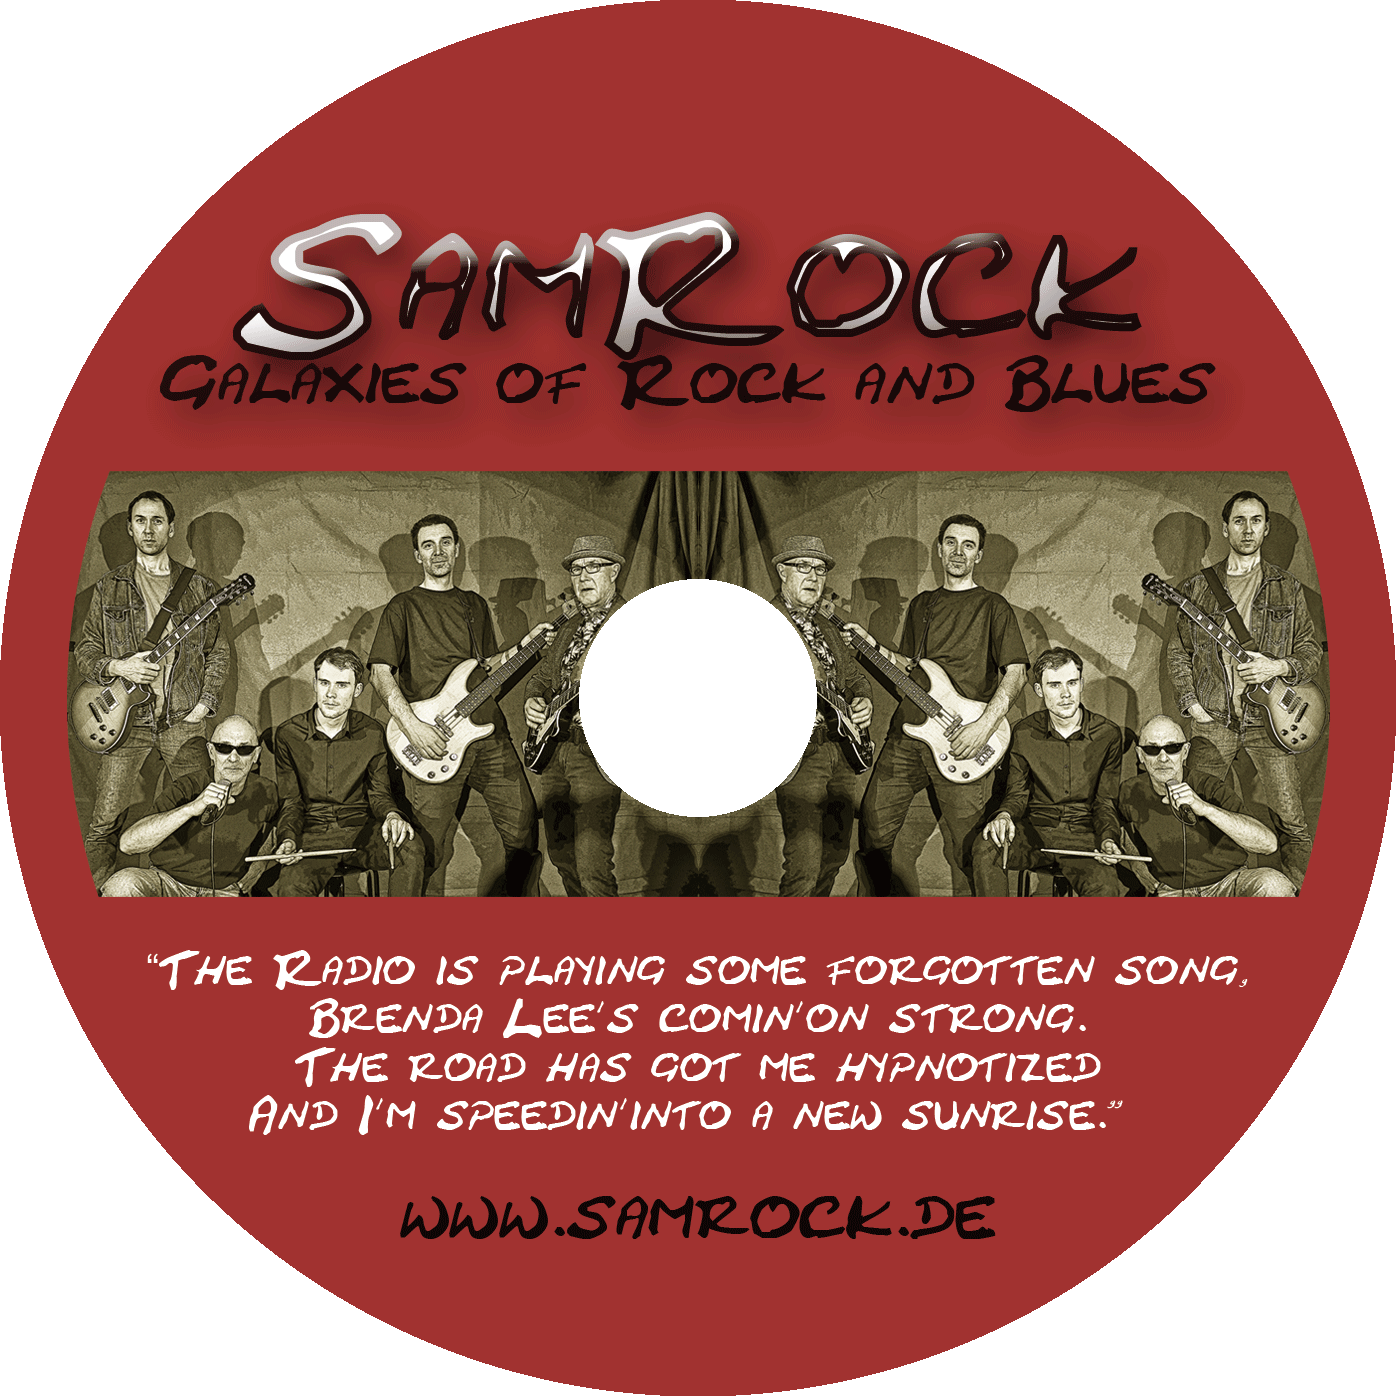 Abbildung der Samrock-CD